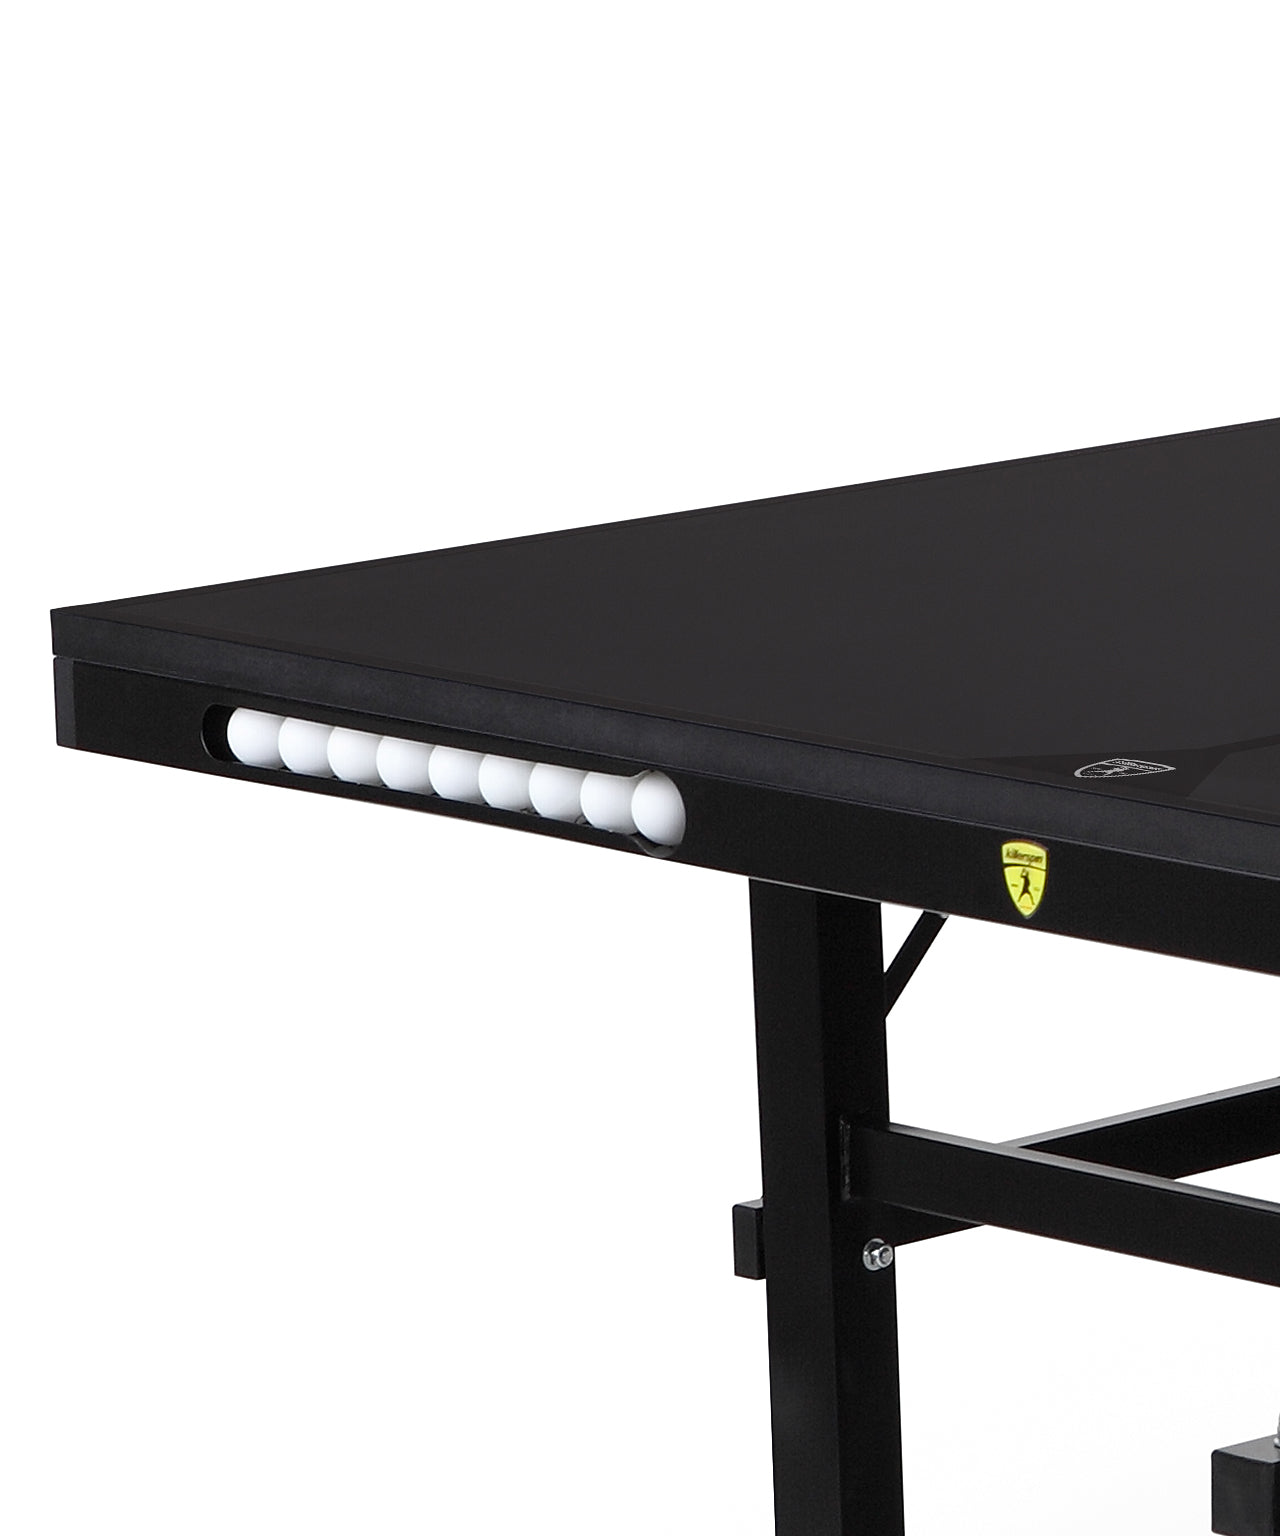 Killerspin Indoor Ping Pong Table UnPlugNPlay415 Max DeepChocolate Black frame Black top model 2020 - ball pocket